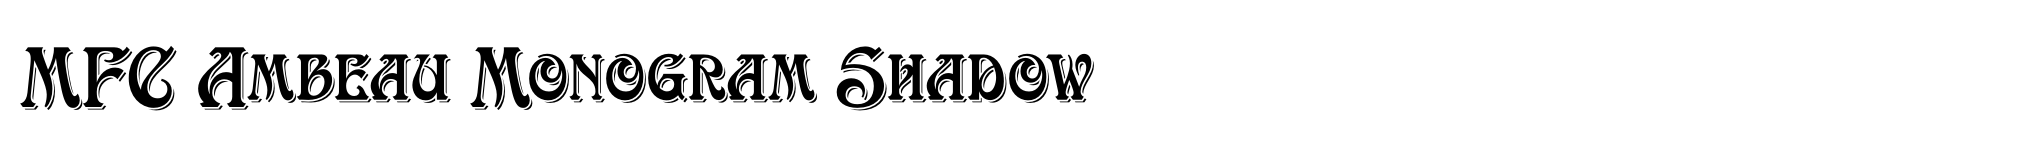 MFC Ambeau Monogram Shadow image